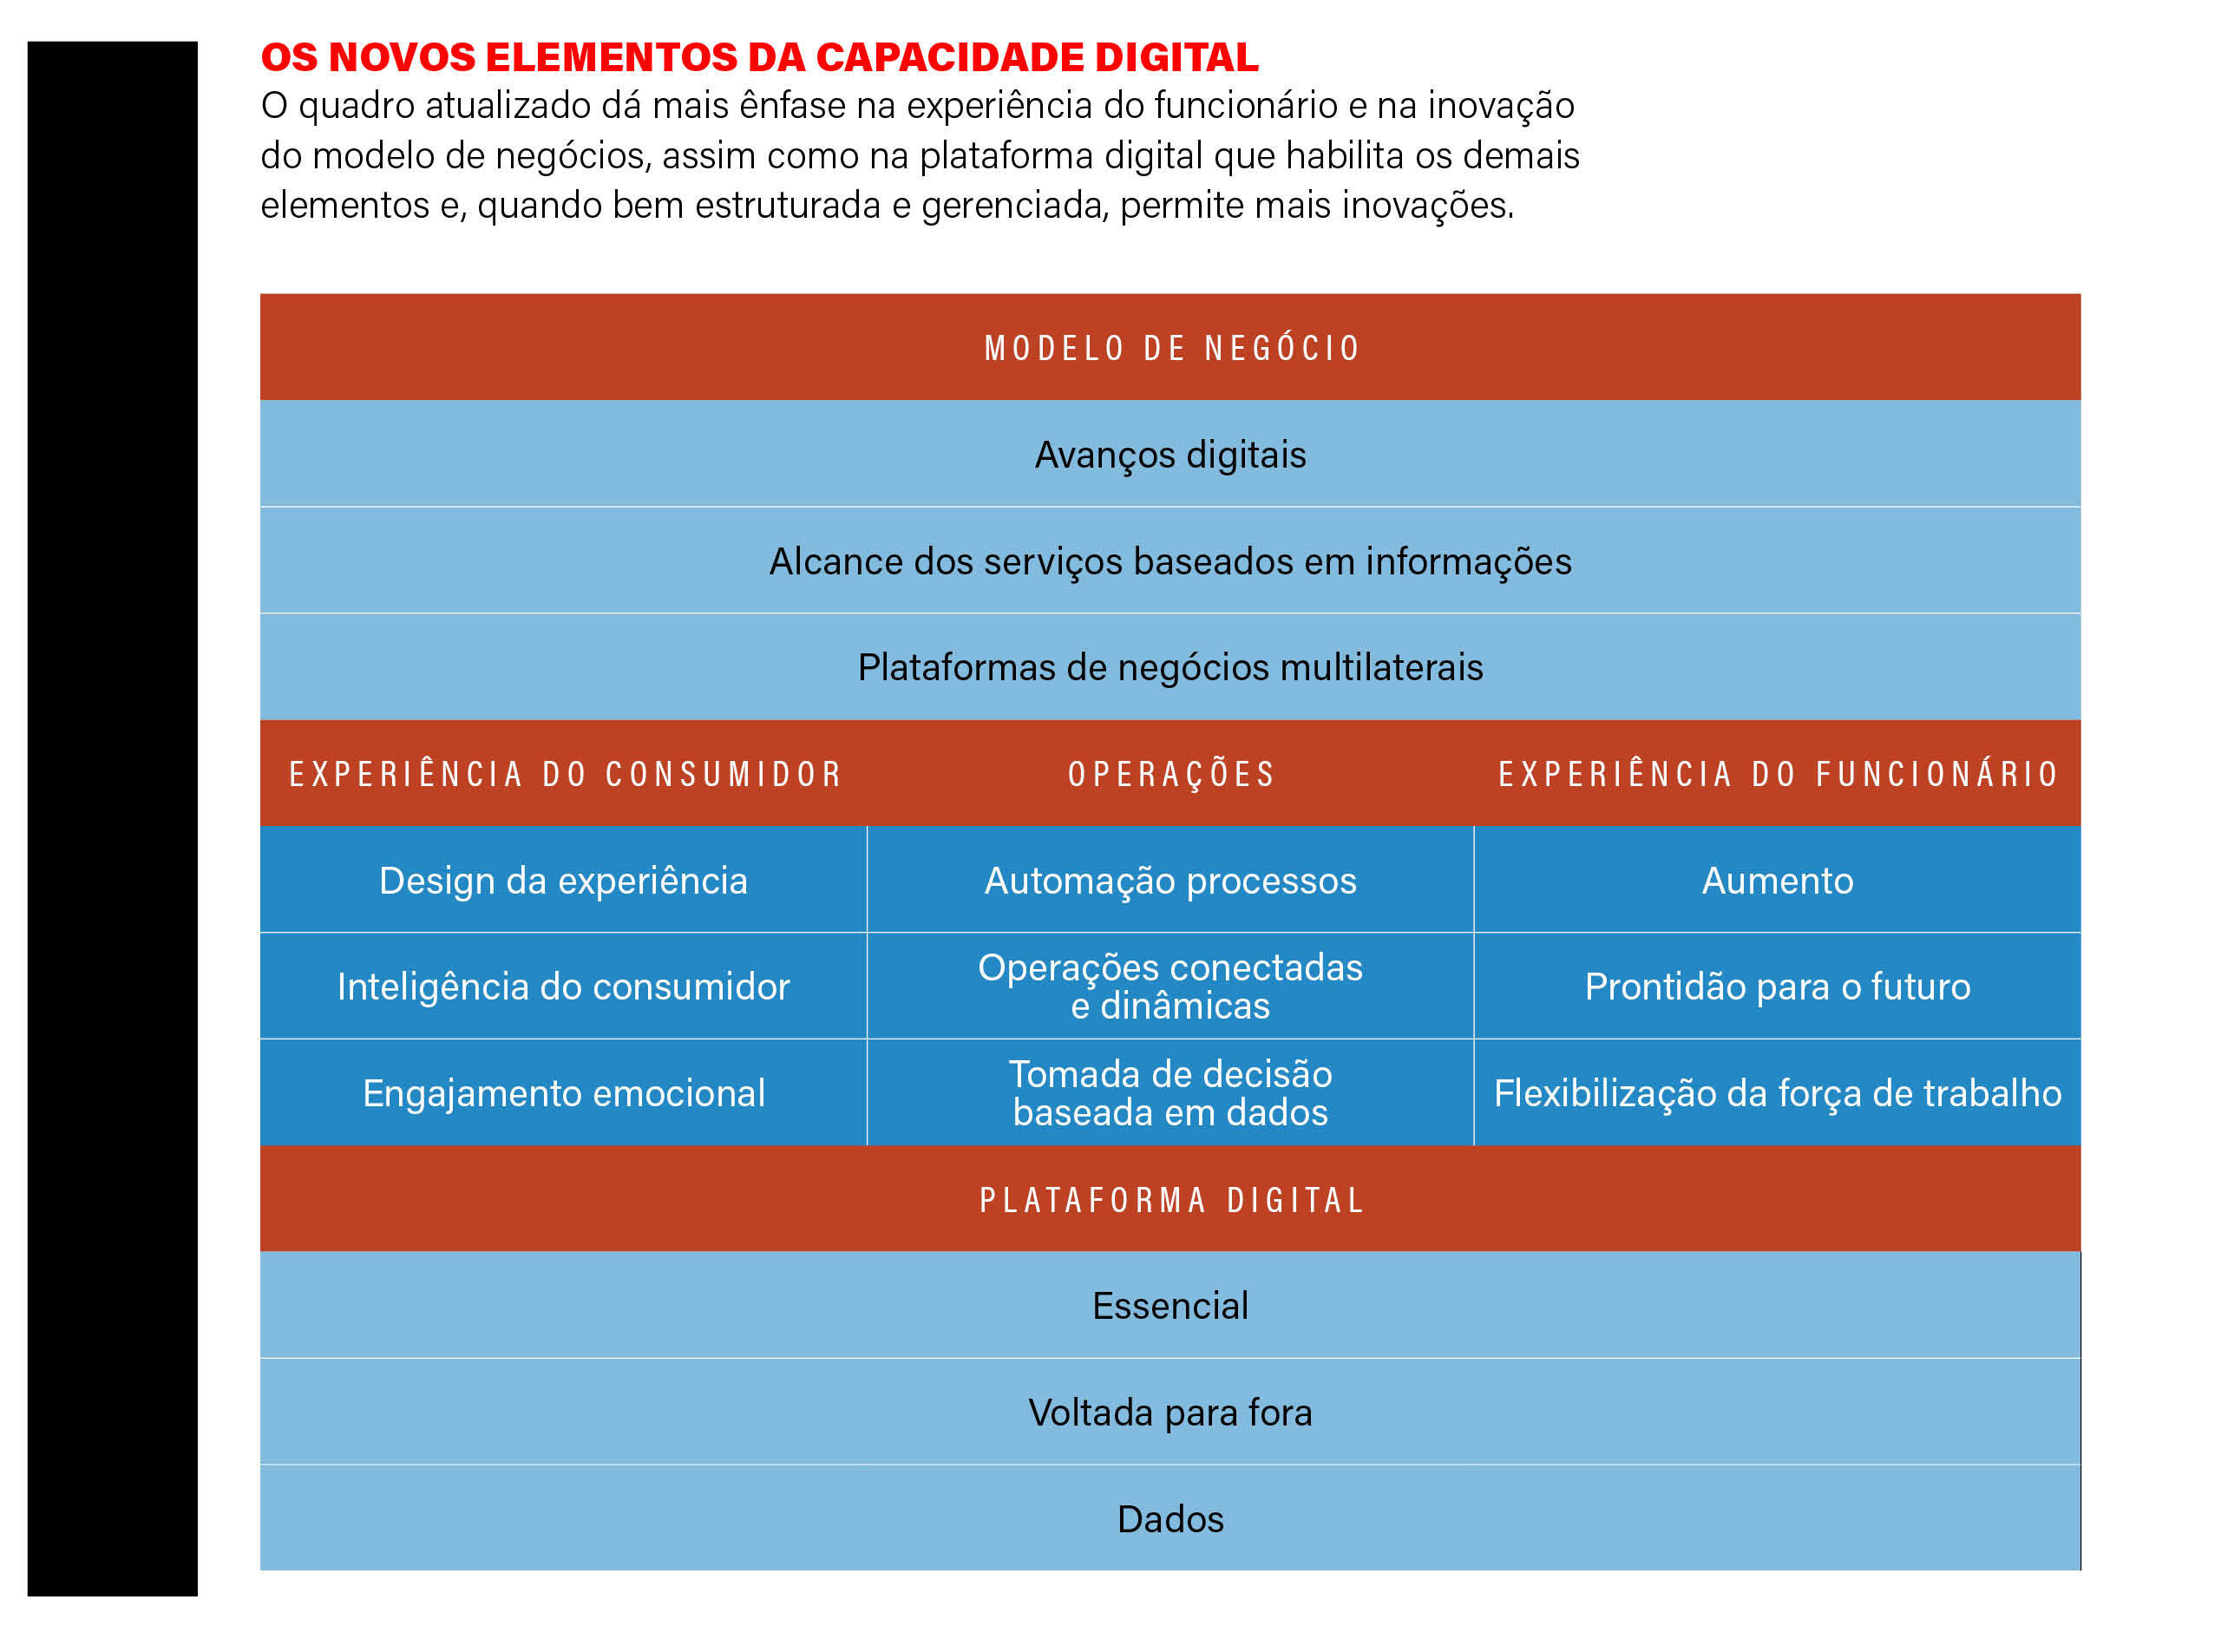 Tabela "Os novos elementos da capacidade digital"